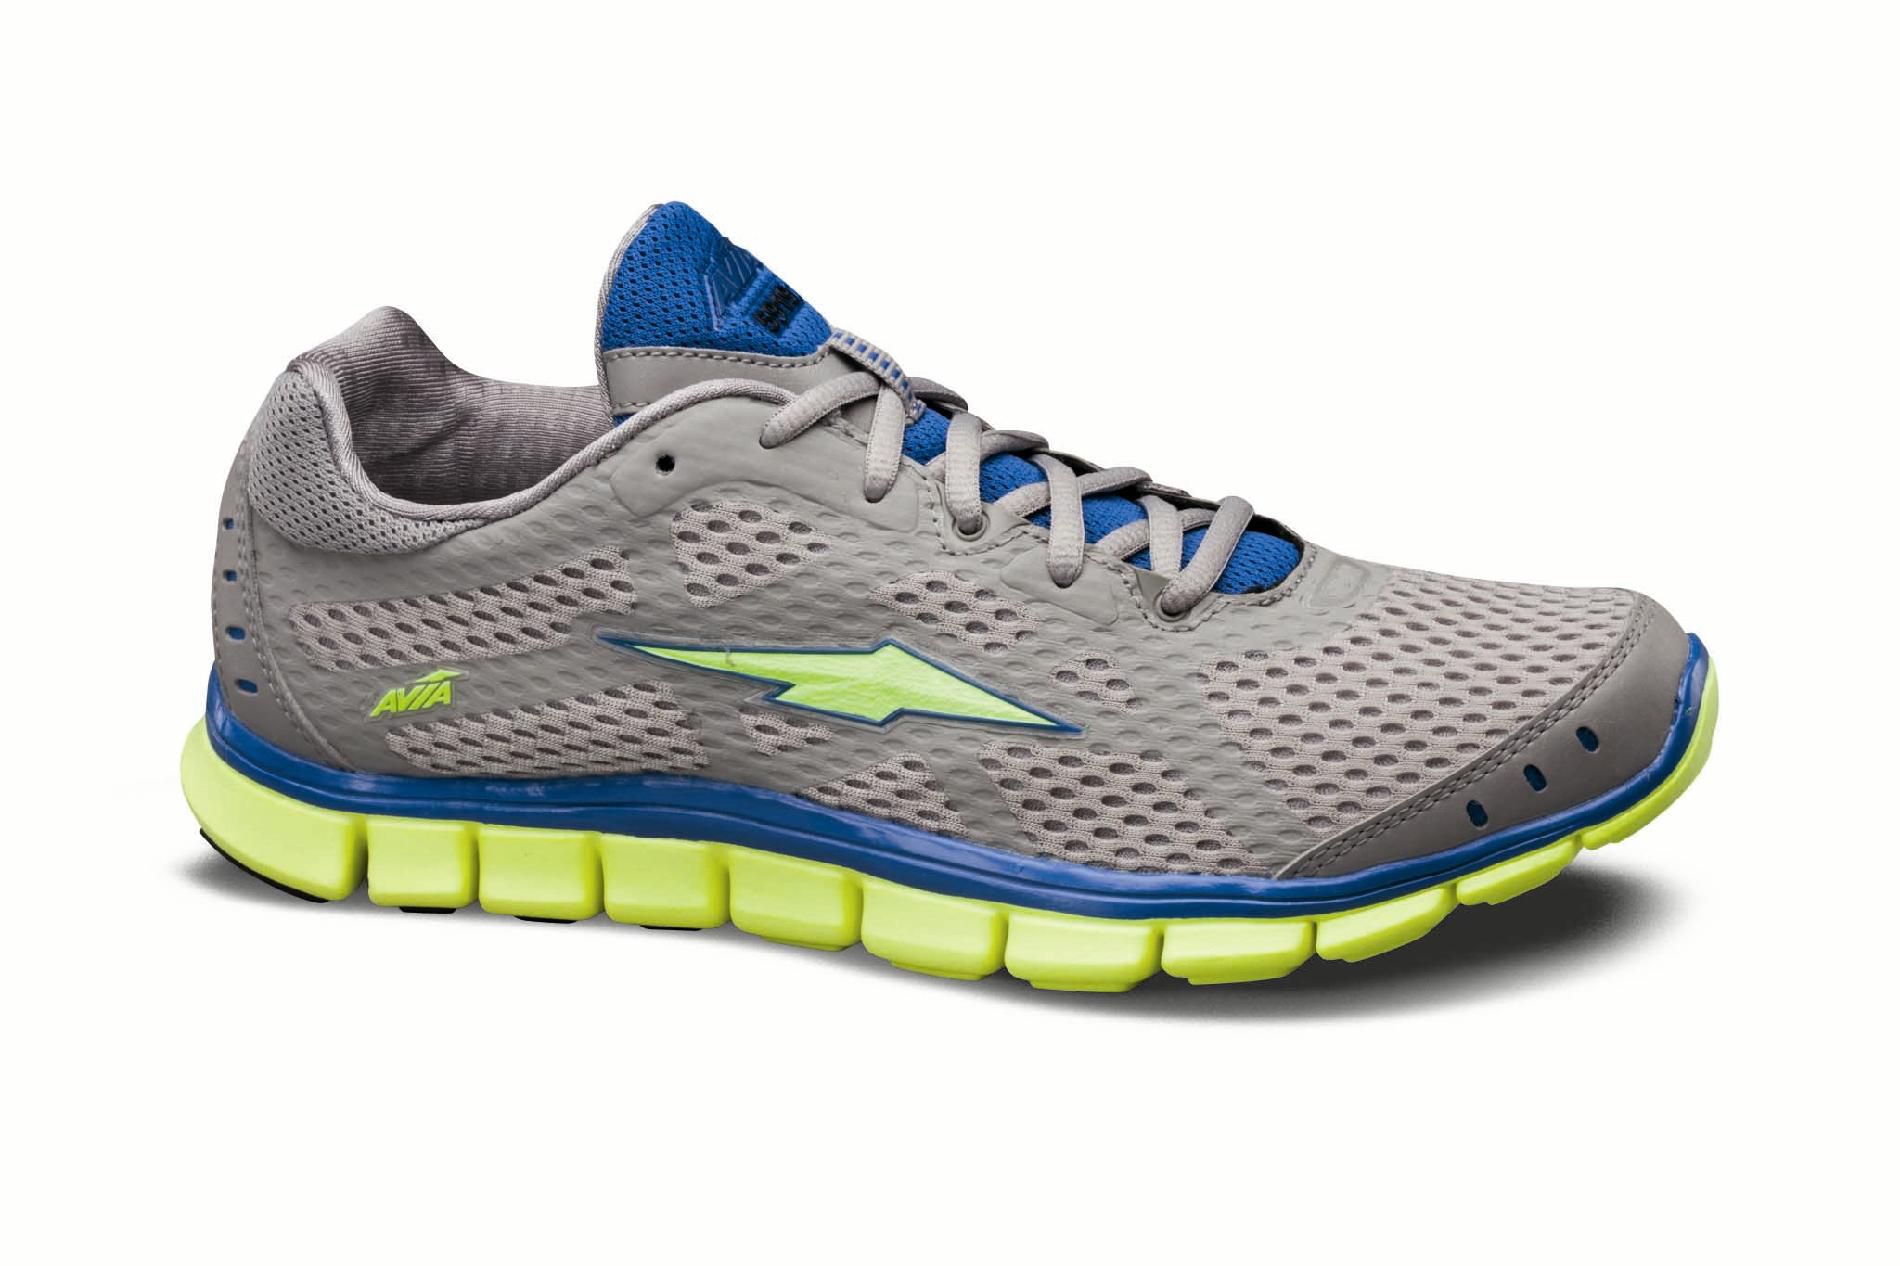 Avia Men's Athletic Shoe CC Tech Run - Gray